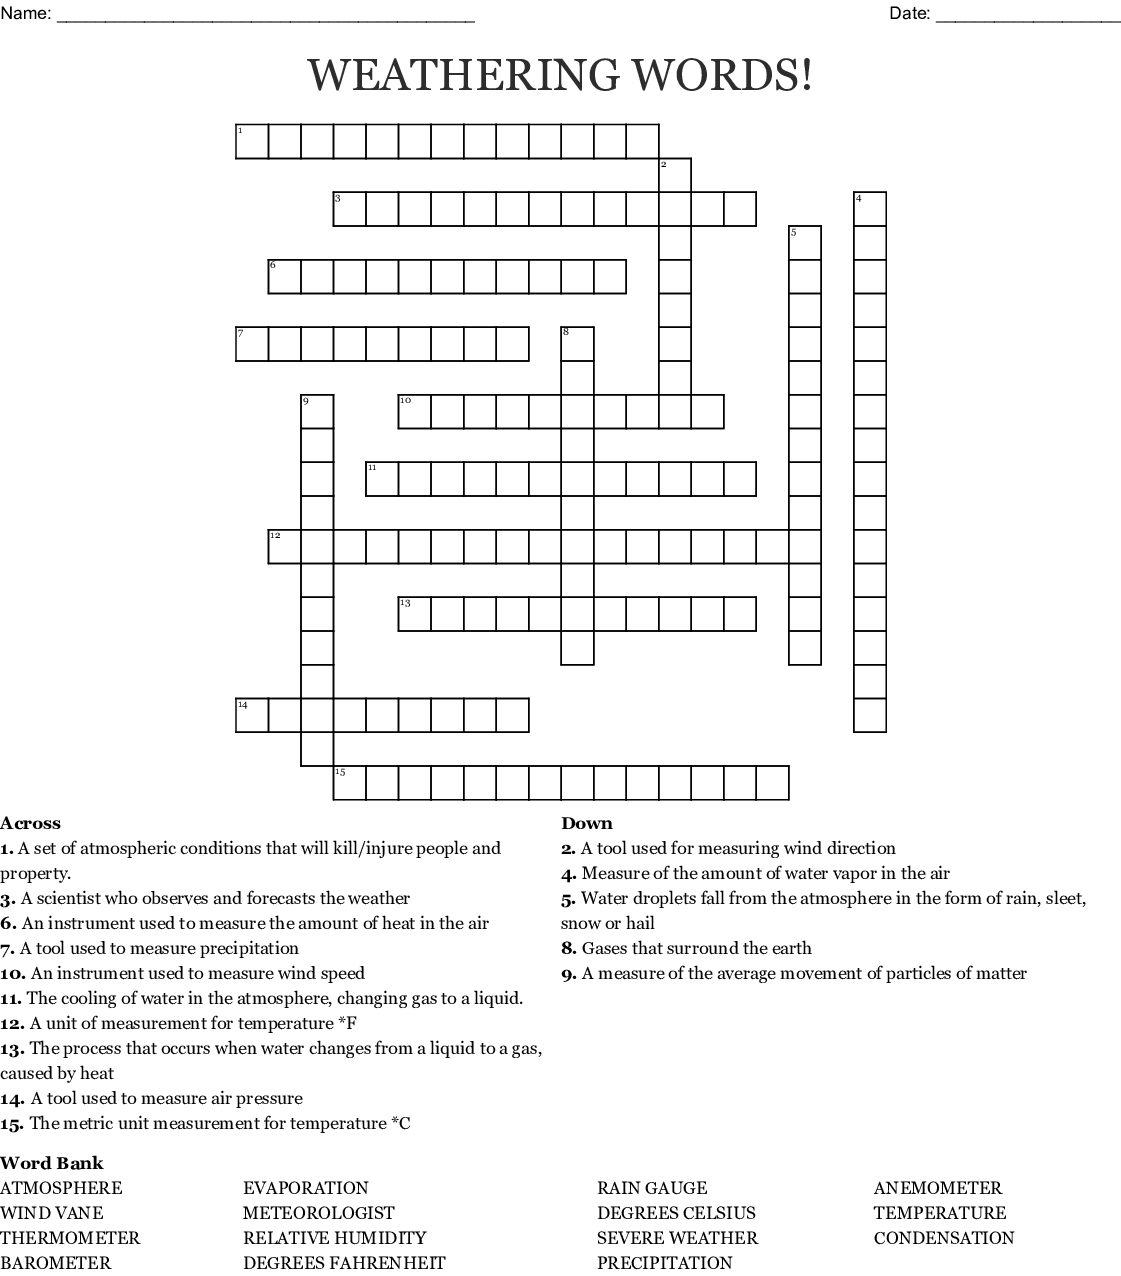 Printers Measure Crossword - Mirroreyes Printable Crossword Puzzles